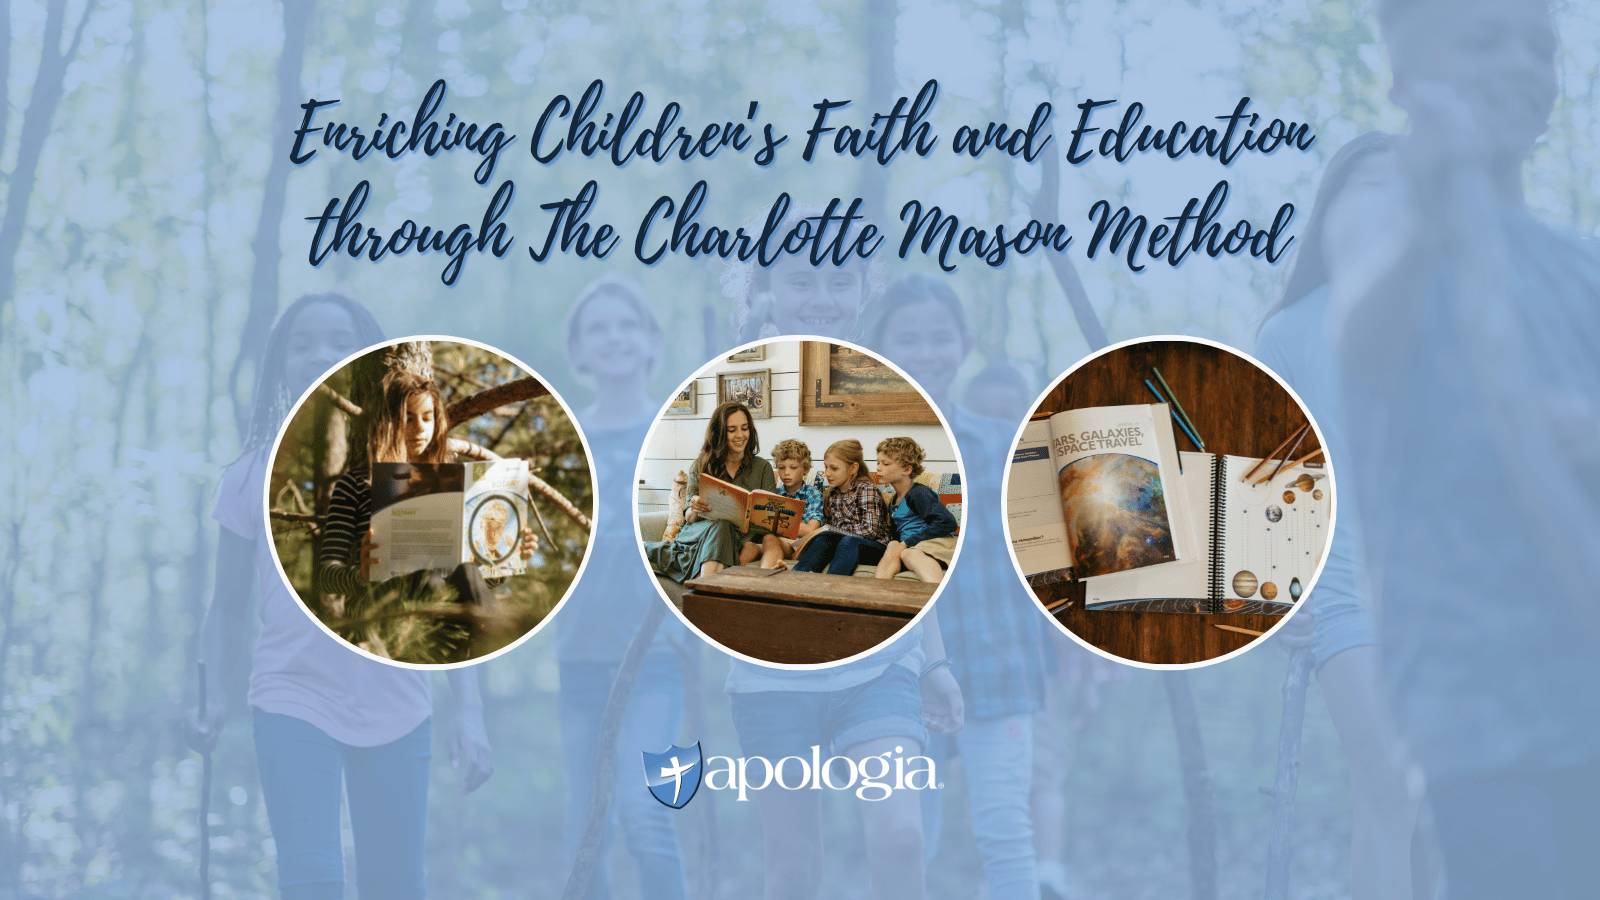 Enriching Children’s Faith and Education through The Charlotte Mason Method